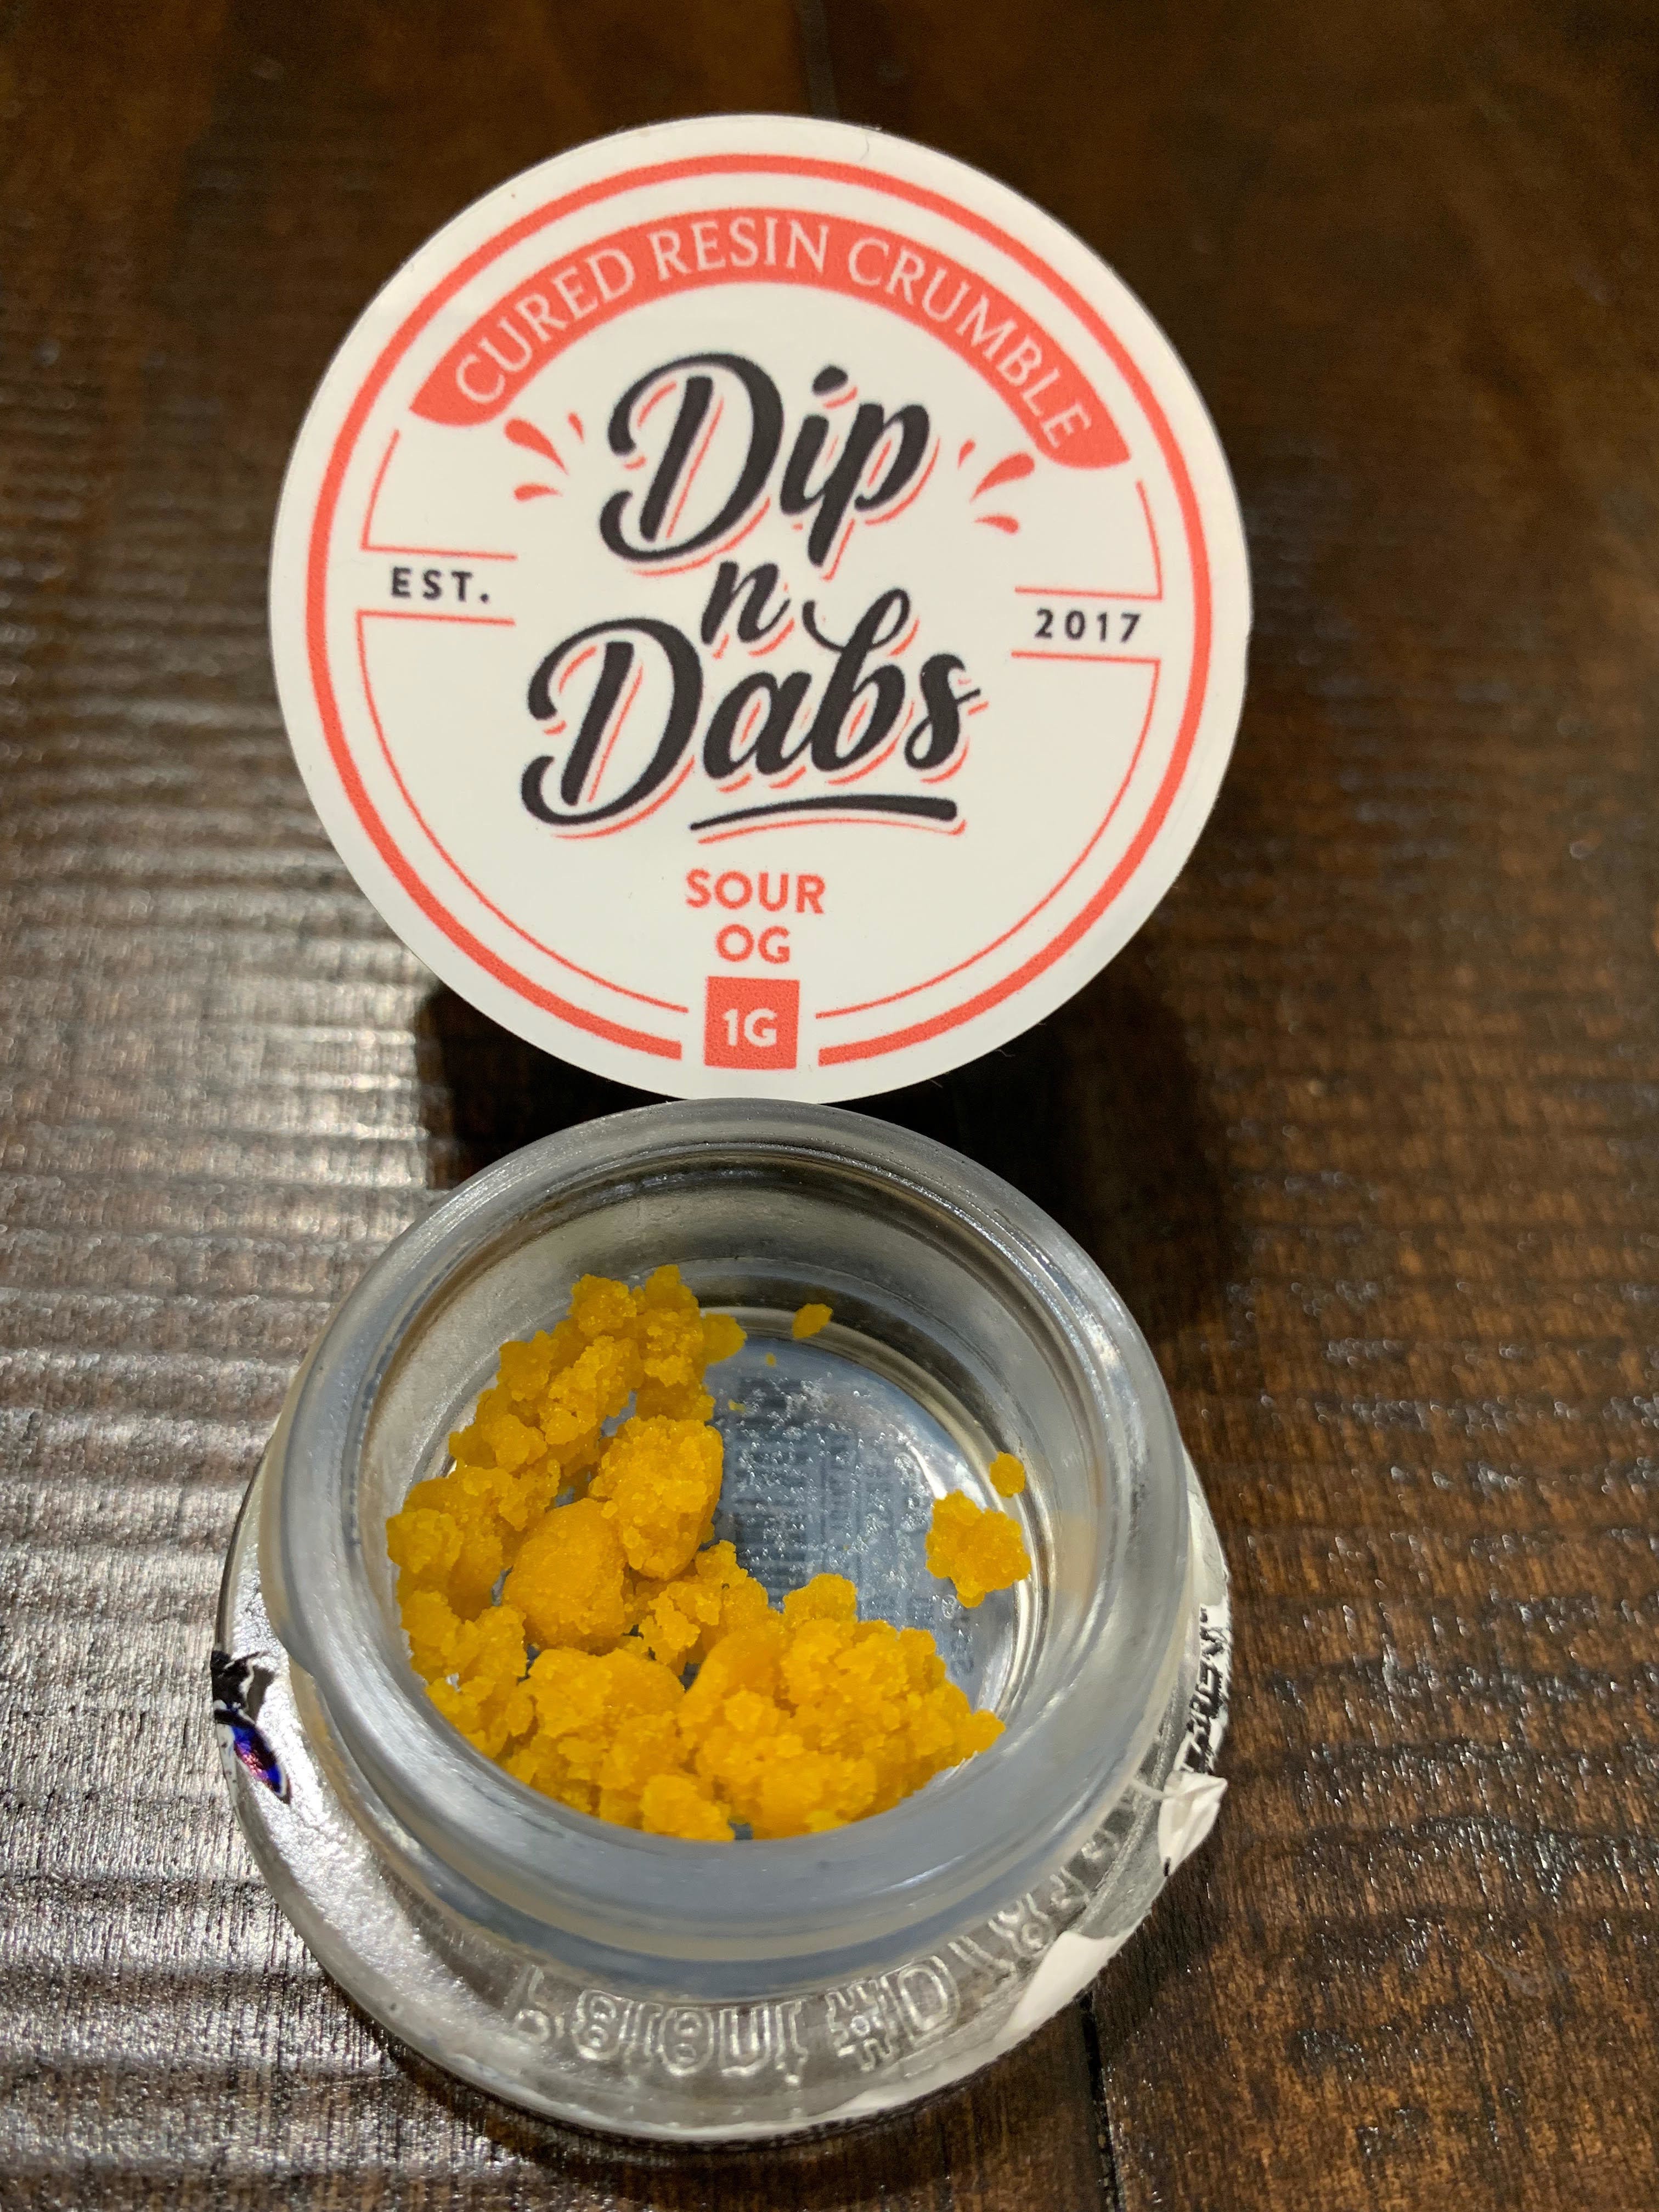 marijuana-dispensaries-210-phelan-ave-san-jose-dip-n-dabs-cured-resin-crumble-sour-og